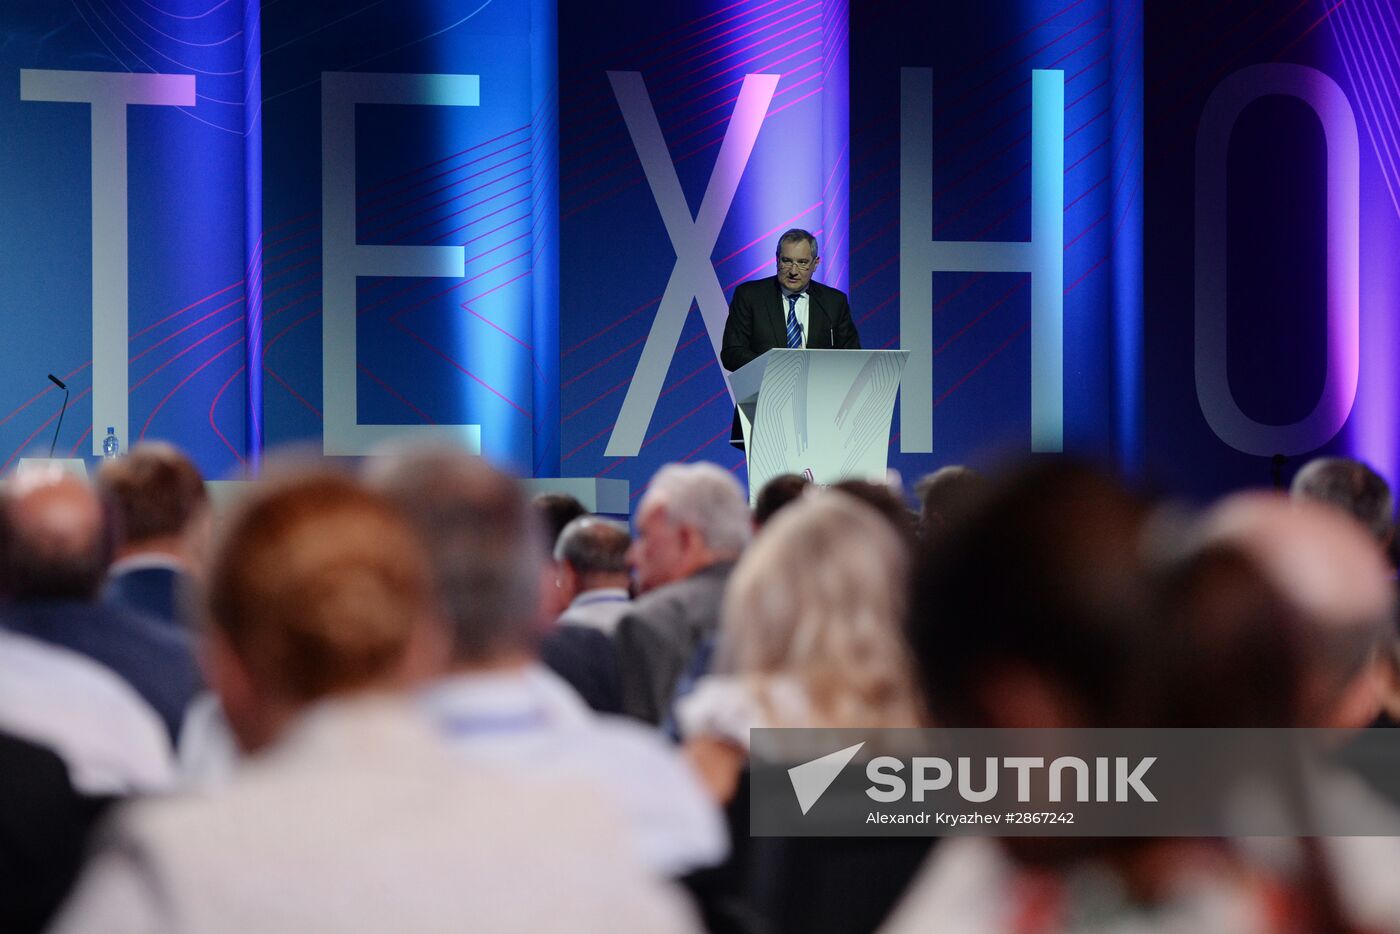 Russian Deputy Prime Minister Dmitry Rogozin attends Technoprom 2016 expo in Novosibirsk